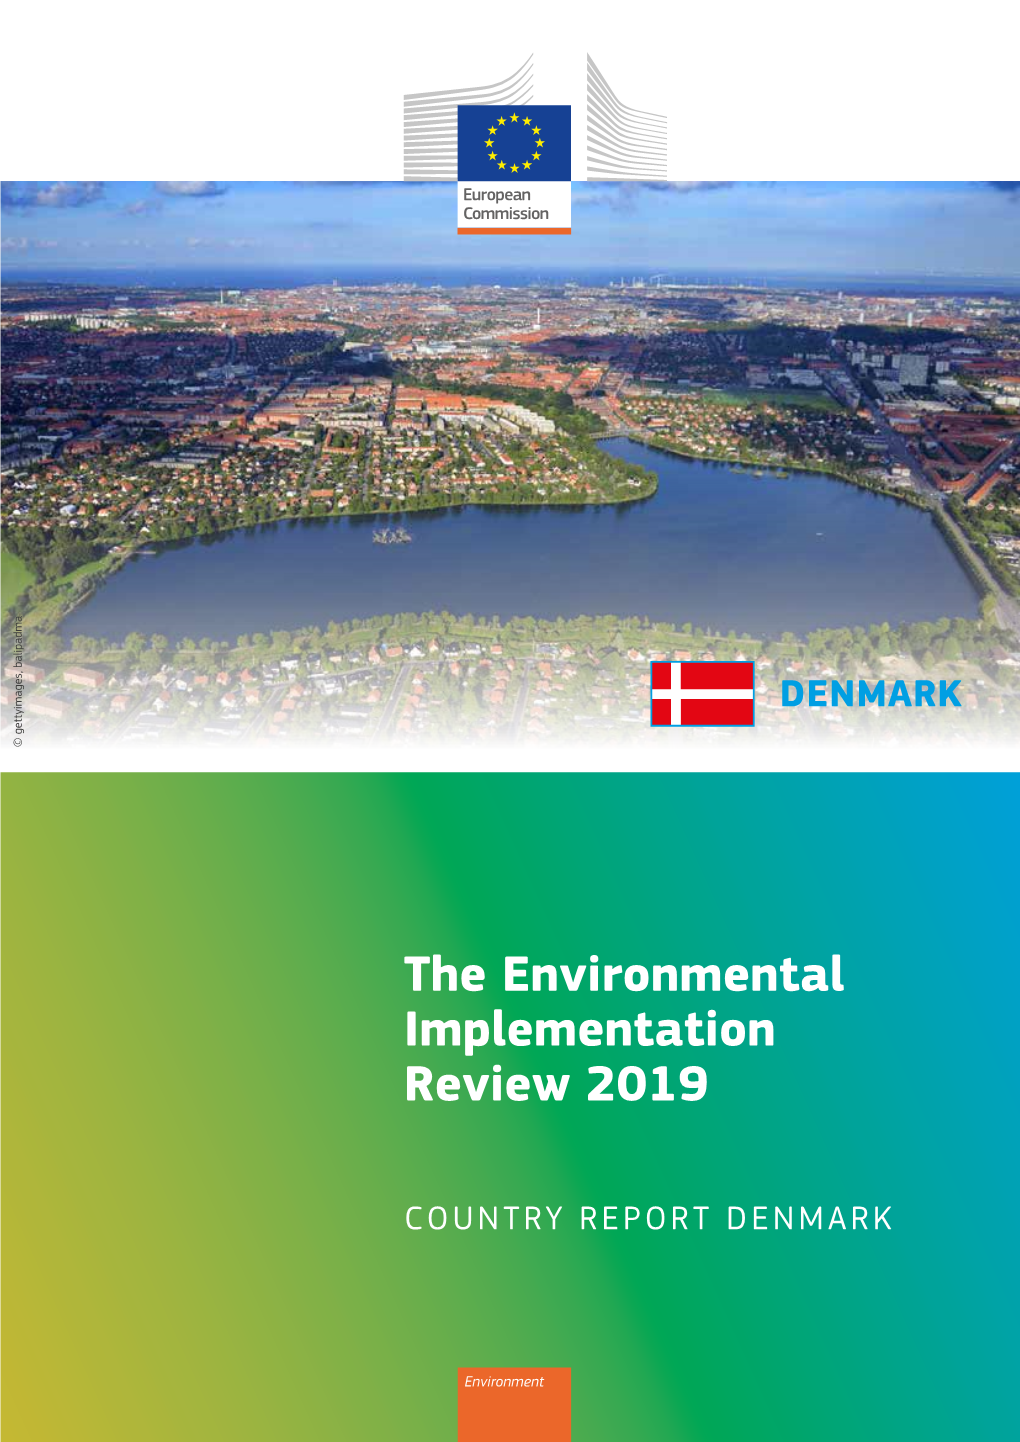 Denmark's Environmental Implementation Review